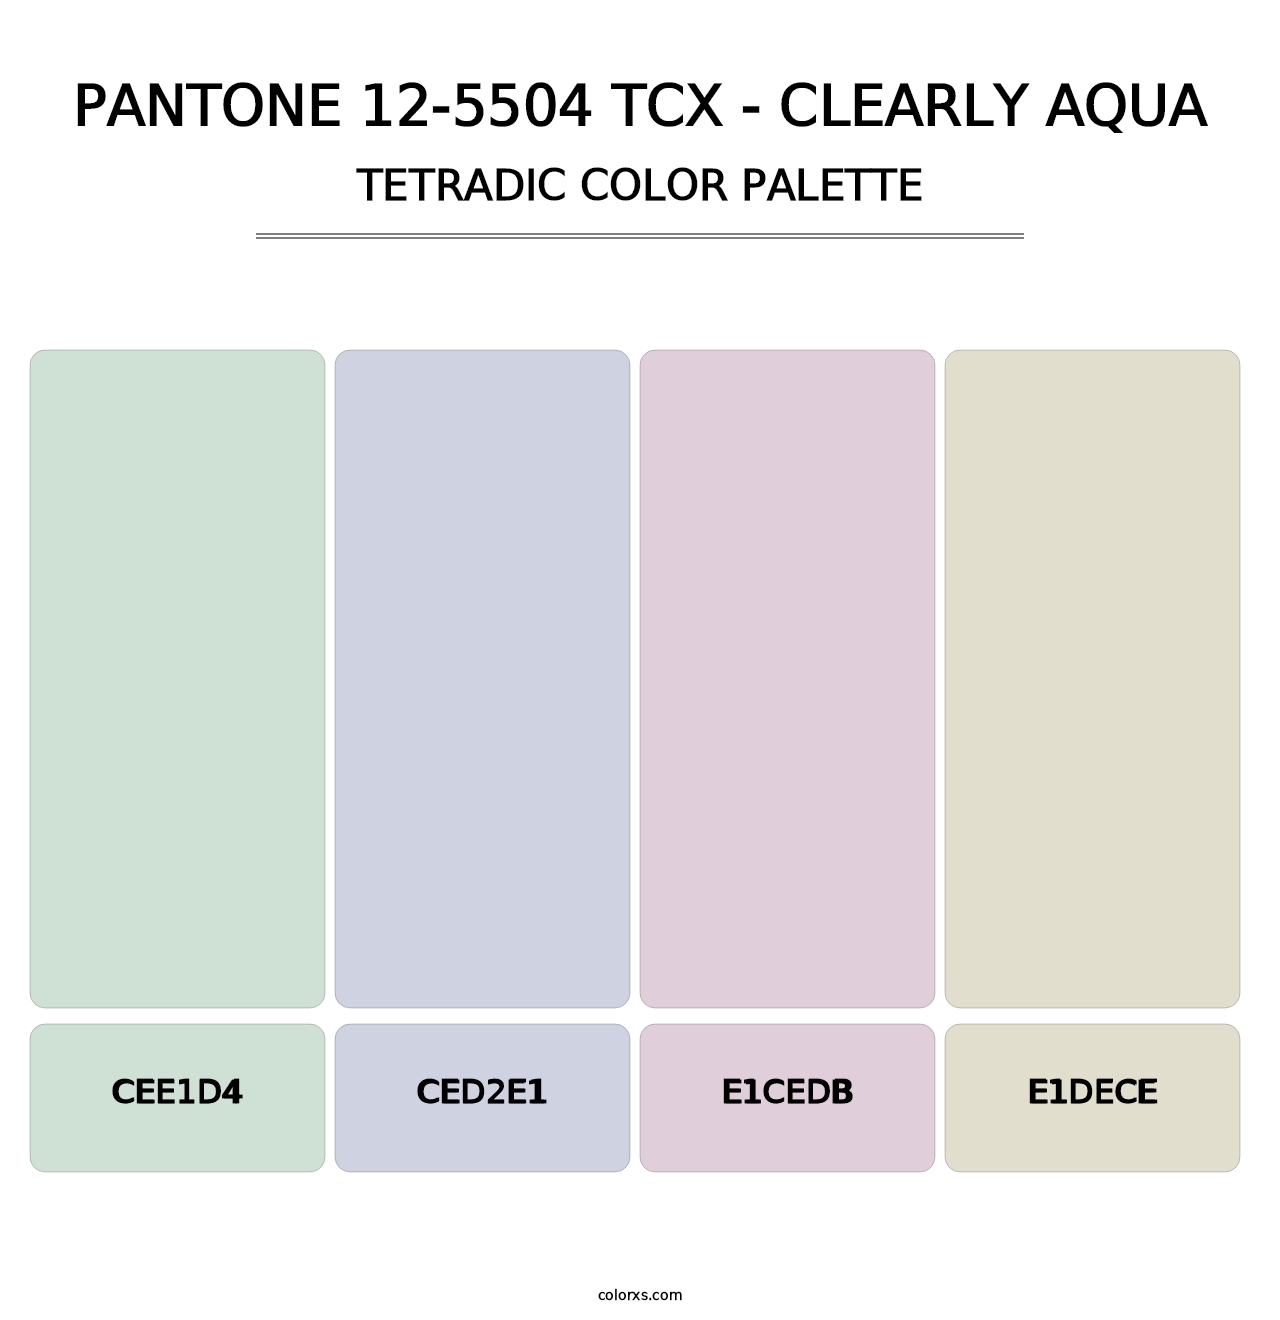 PANTONE 12-5504 TCX - Clearly Aqua - Tetradic Color Palette